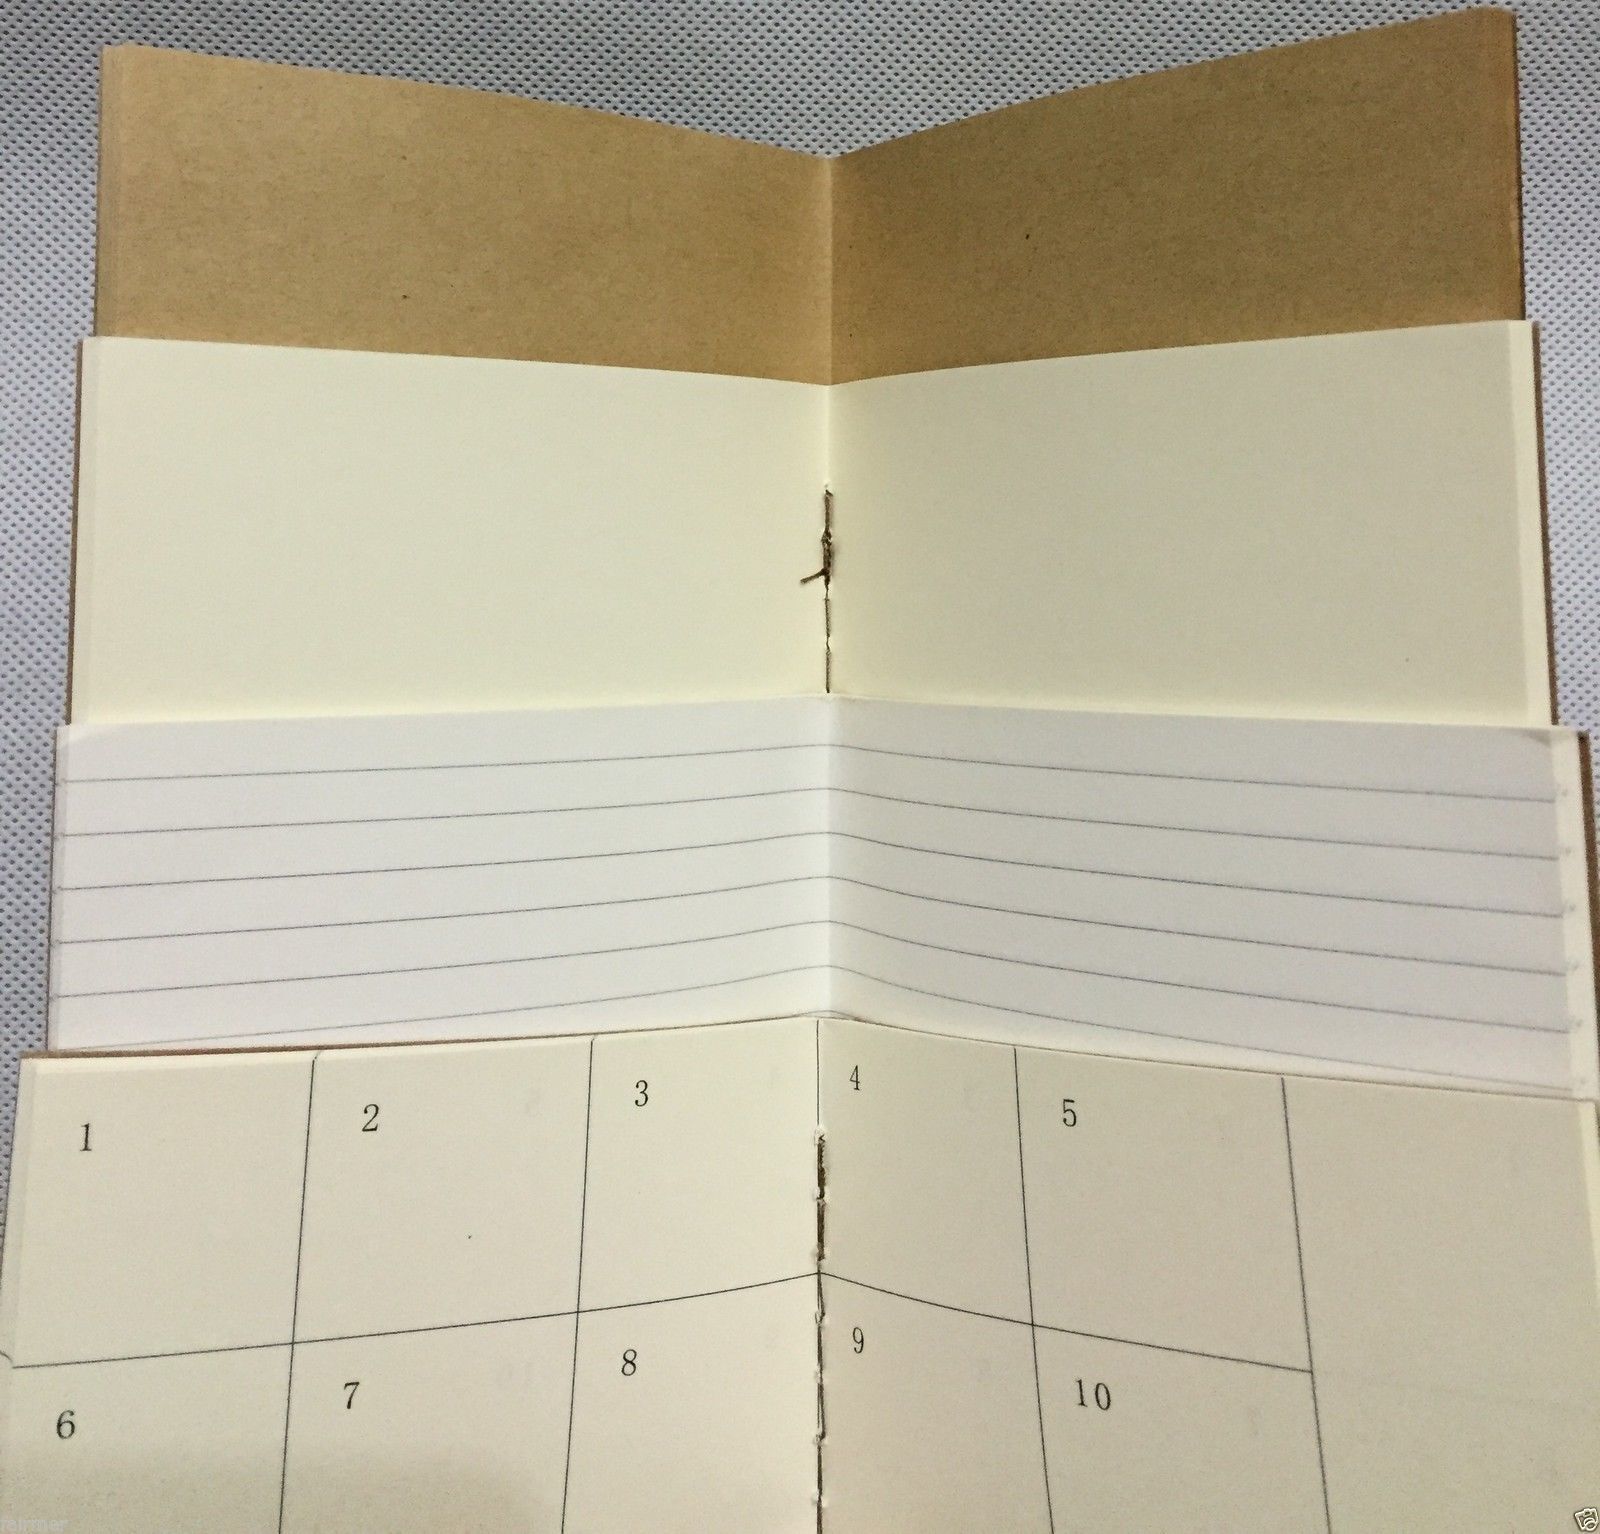 6x4 1 blank paper refills inserts for medium traveler's journal diary note book